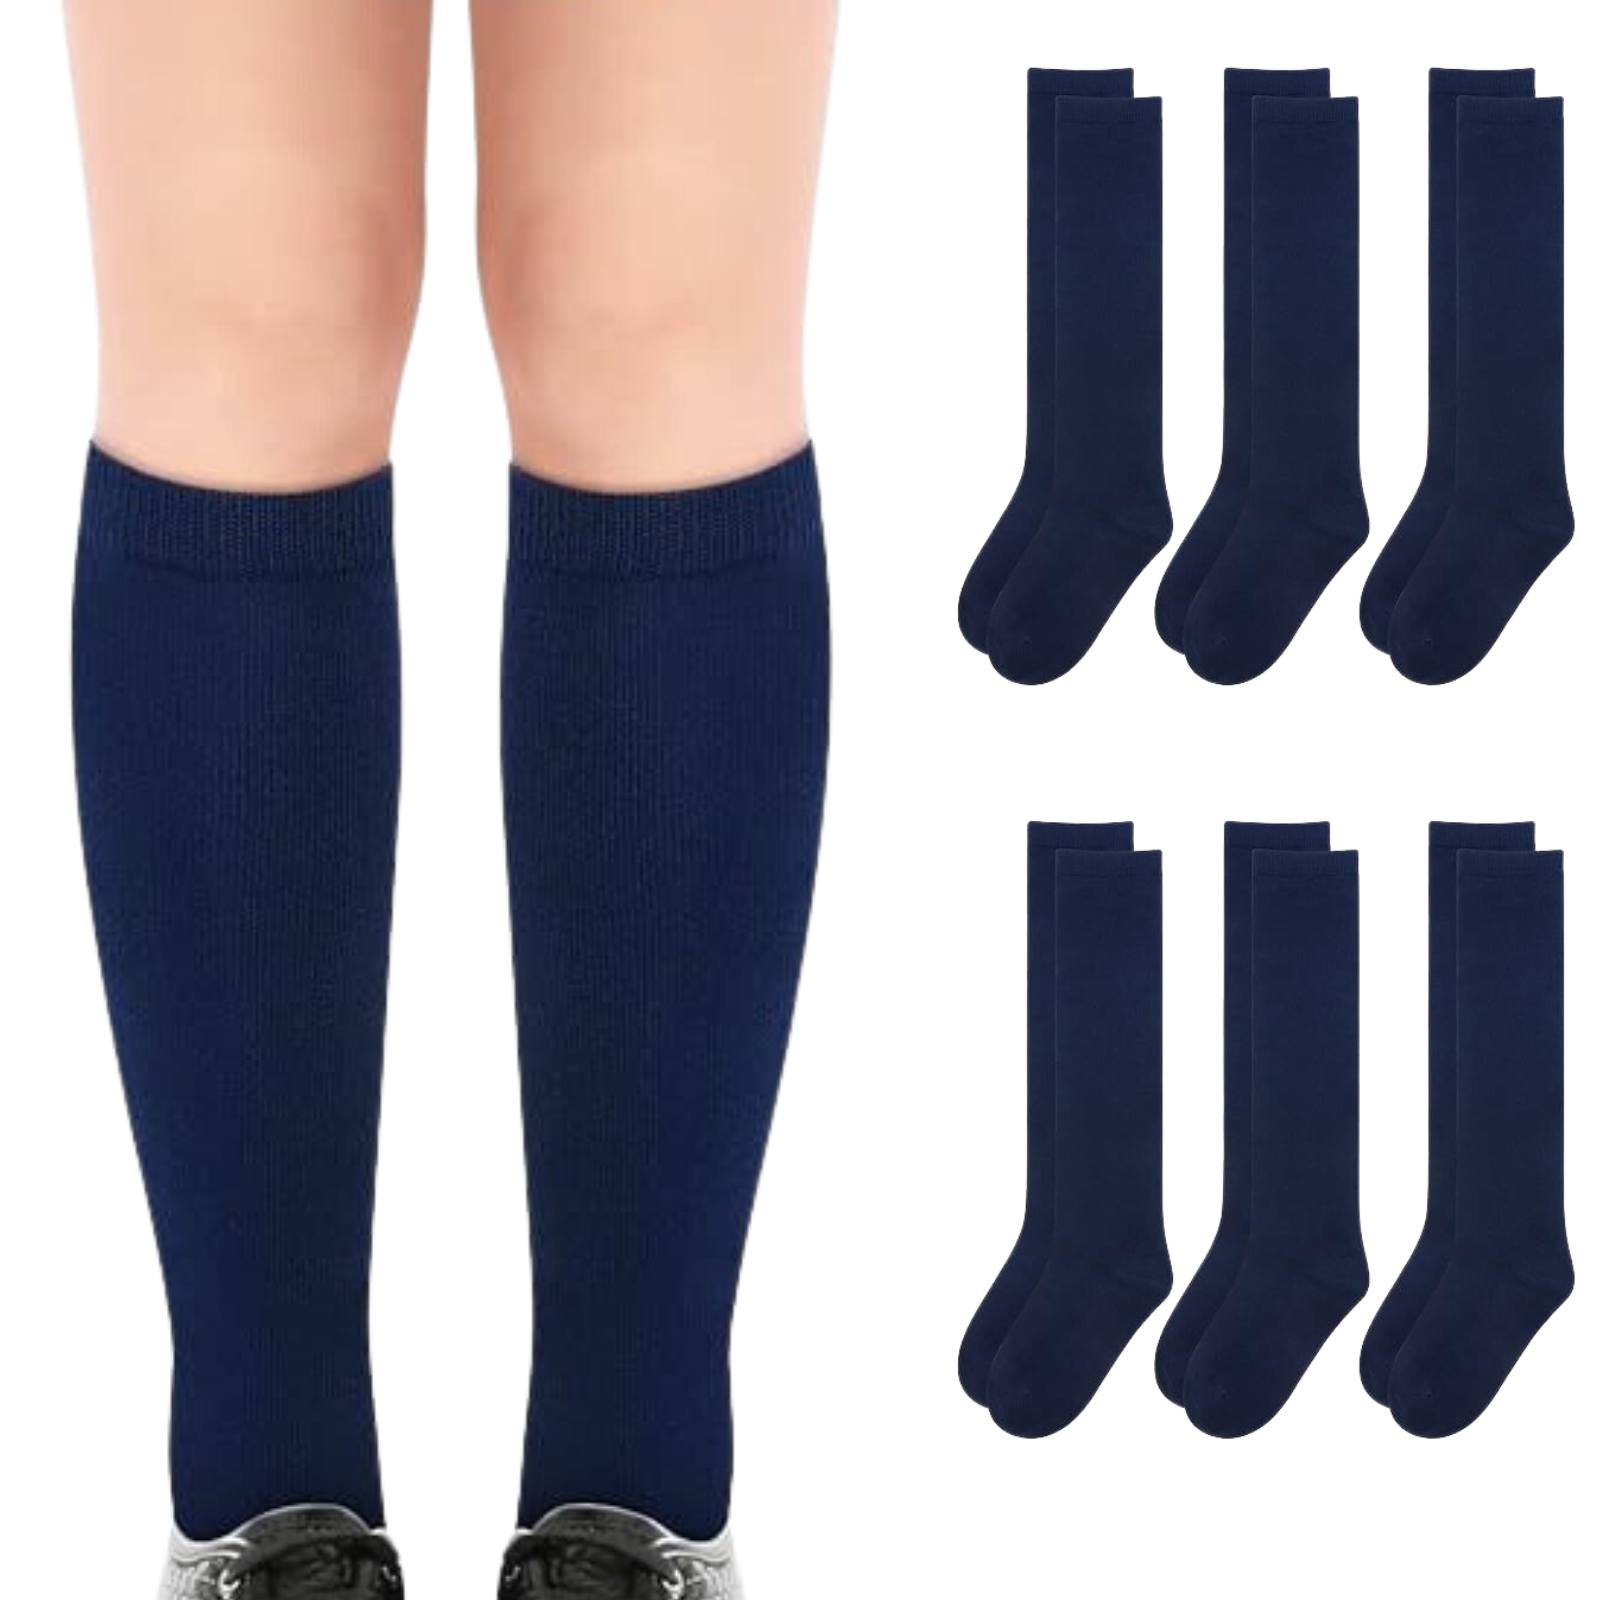 6x Pairs School Uniform Knee High Socks Cotton Rich Girls Boys Kids Bulk - Navy - 6-11 (12+ Years Old)